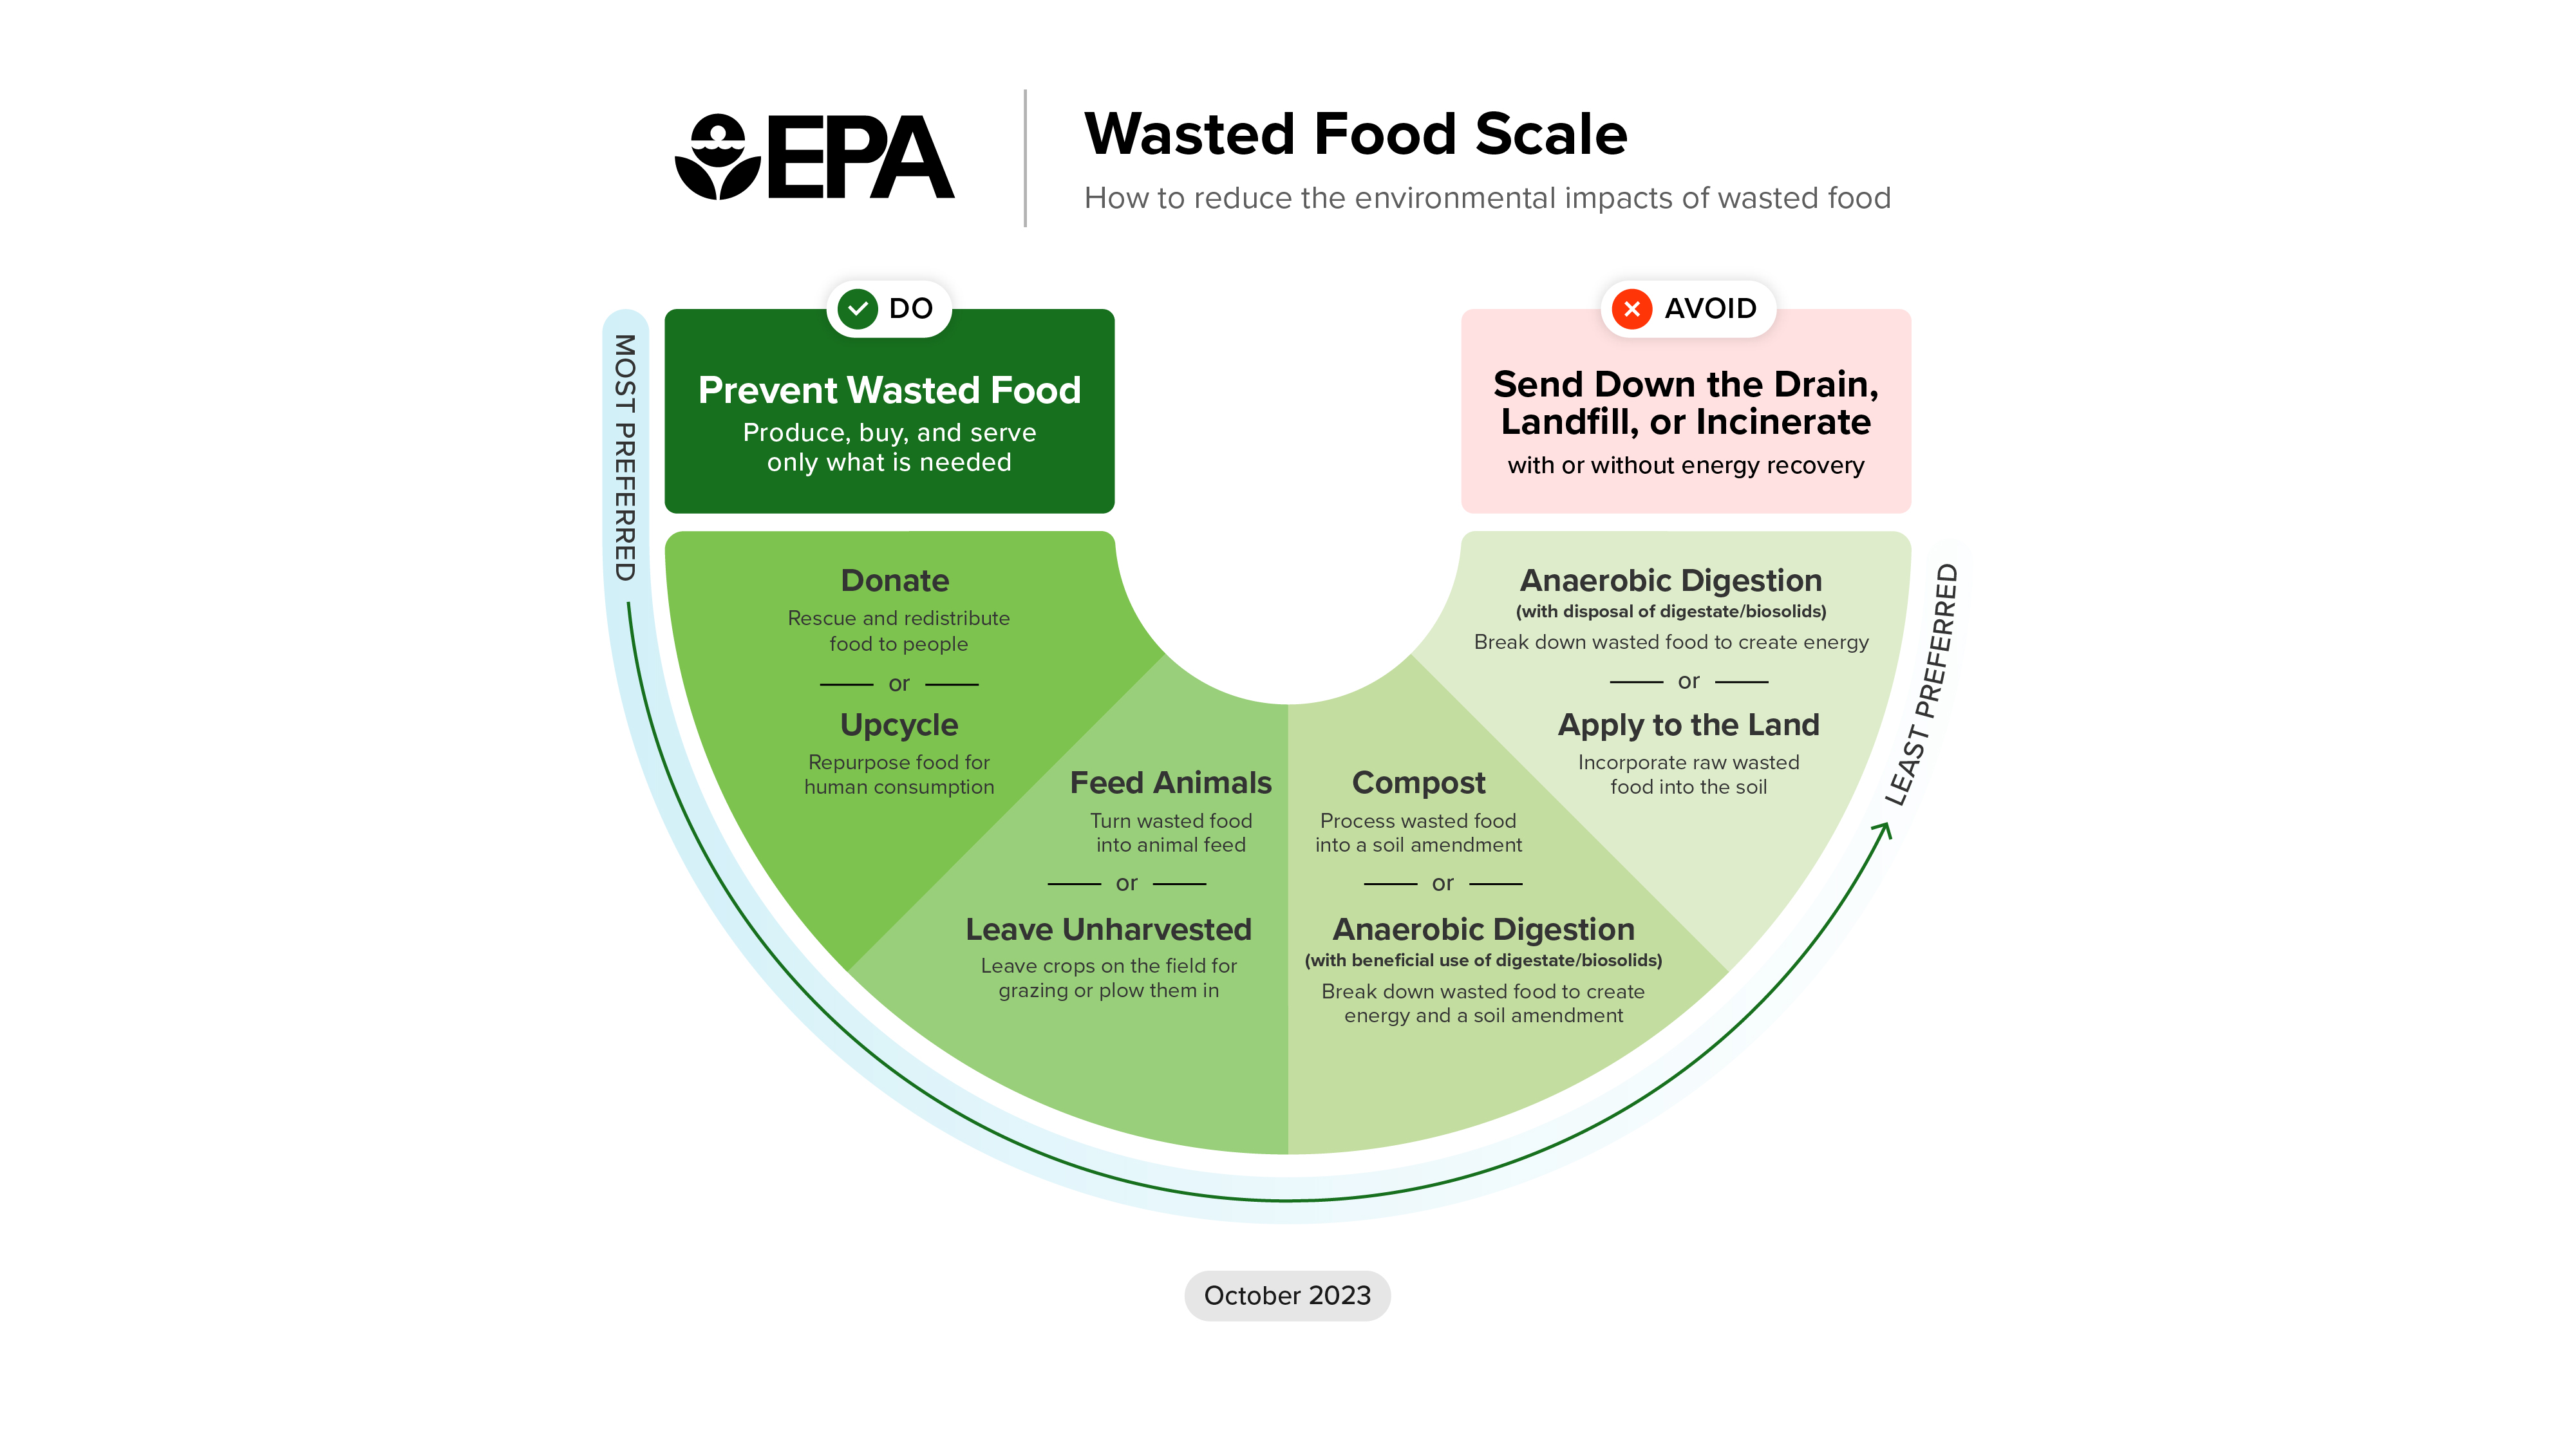 epa-wasted-food-scale-detailed-v4.jpg